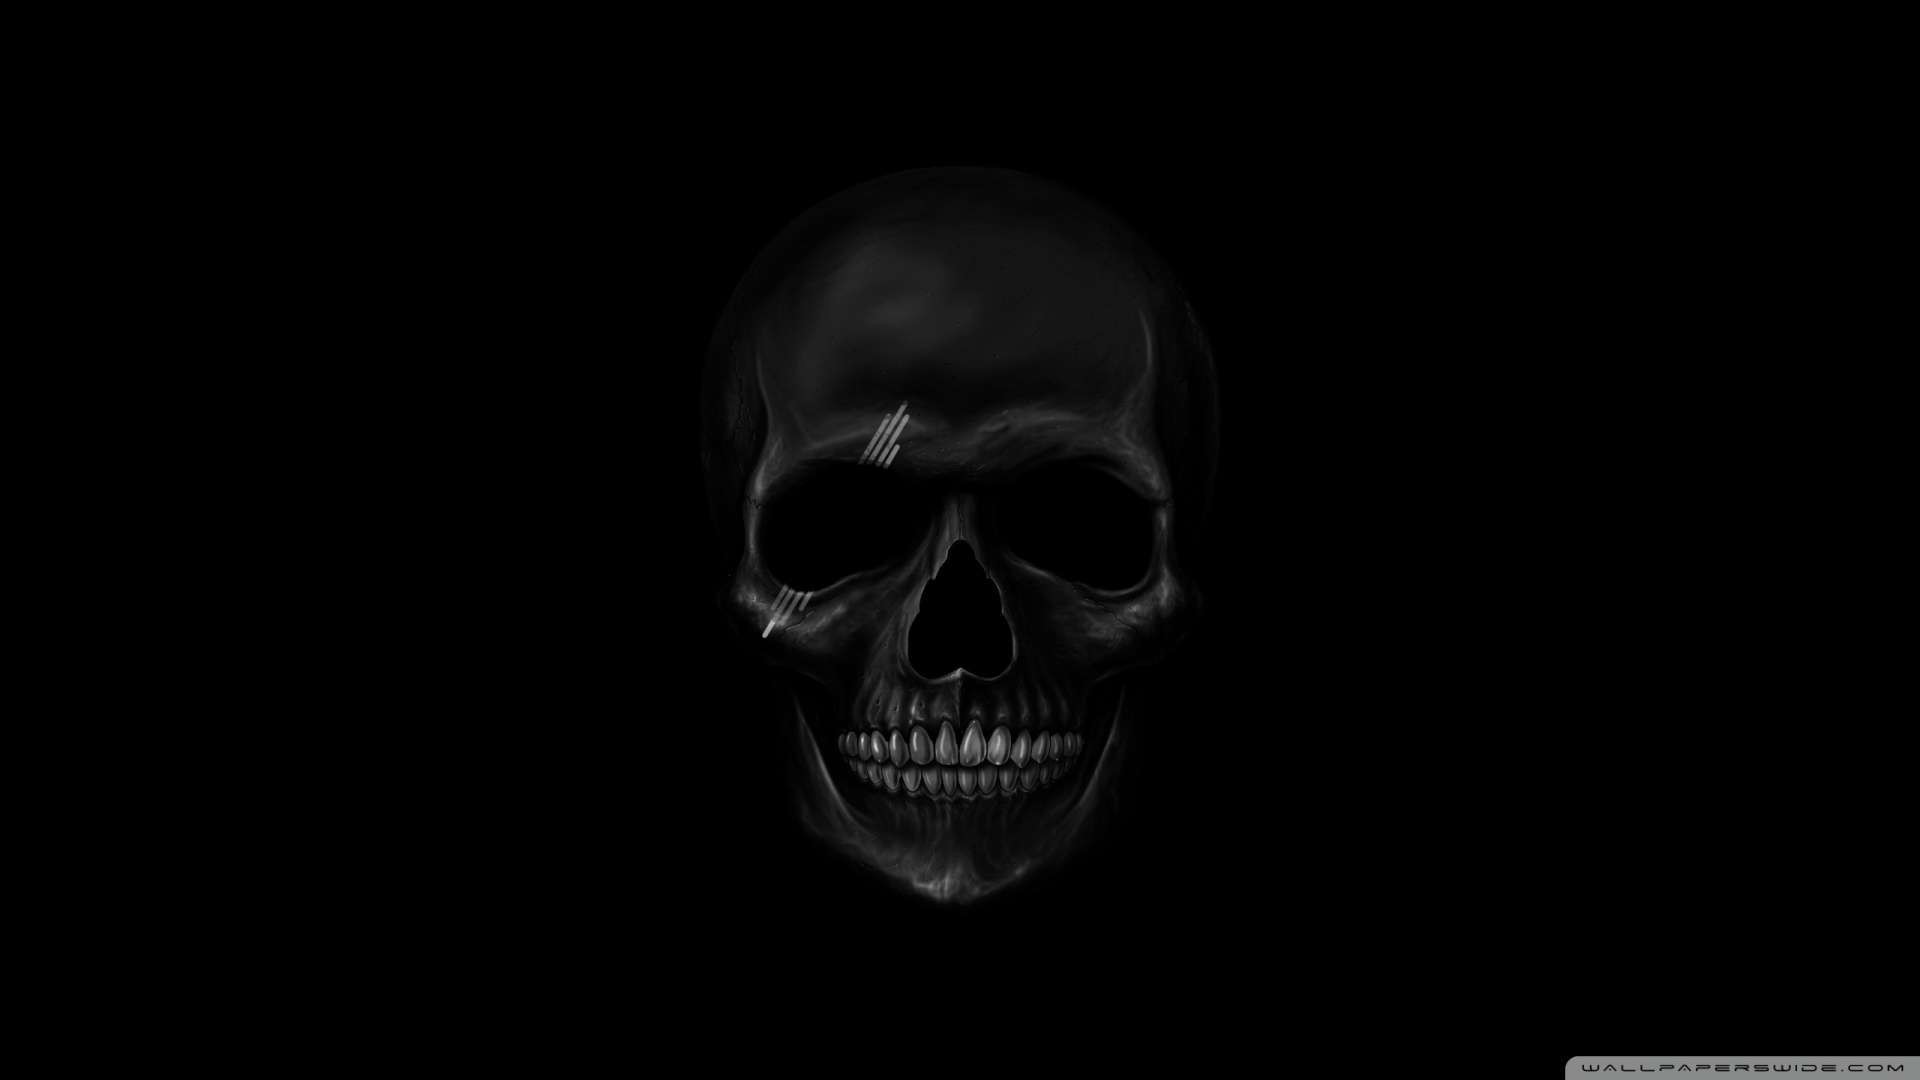 1920x1080 Wallpaper: Black Skull Wallpaper 1080p HD. Upload at February 12, 2014 .